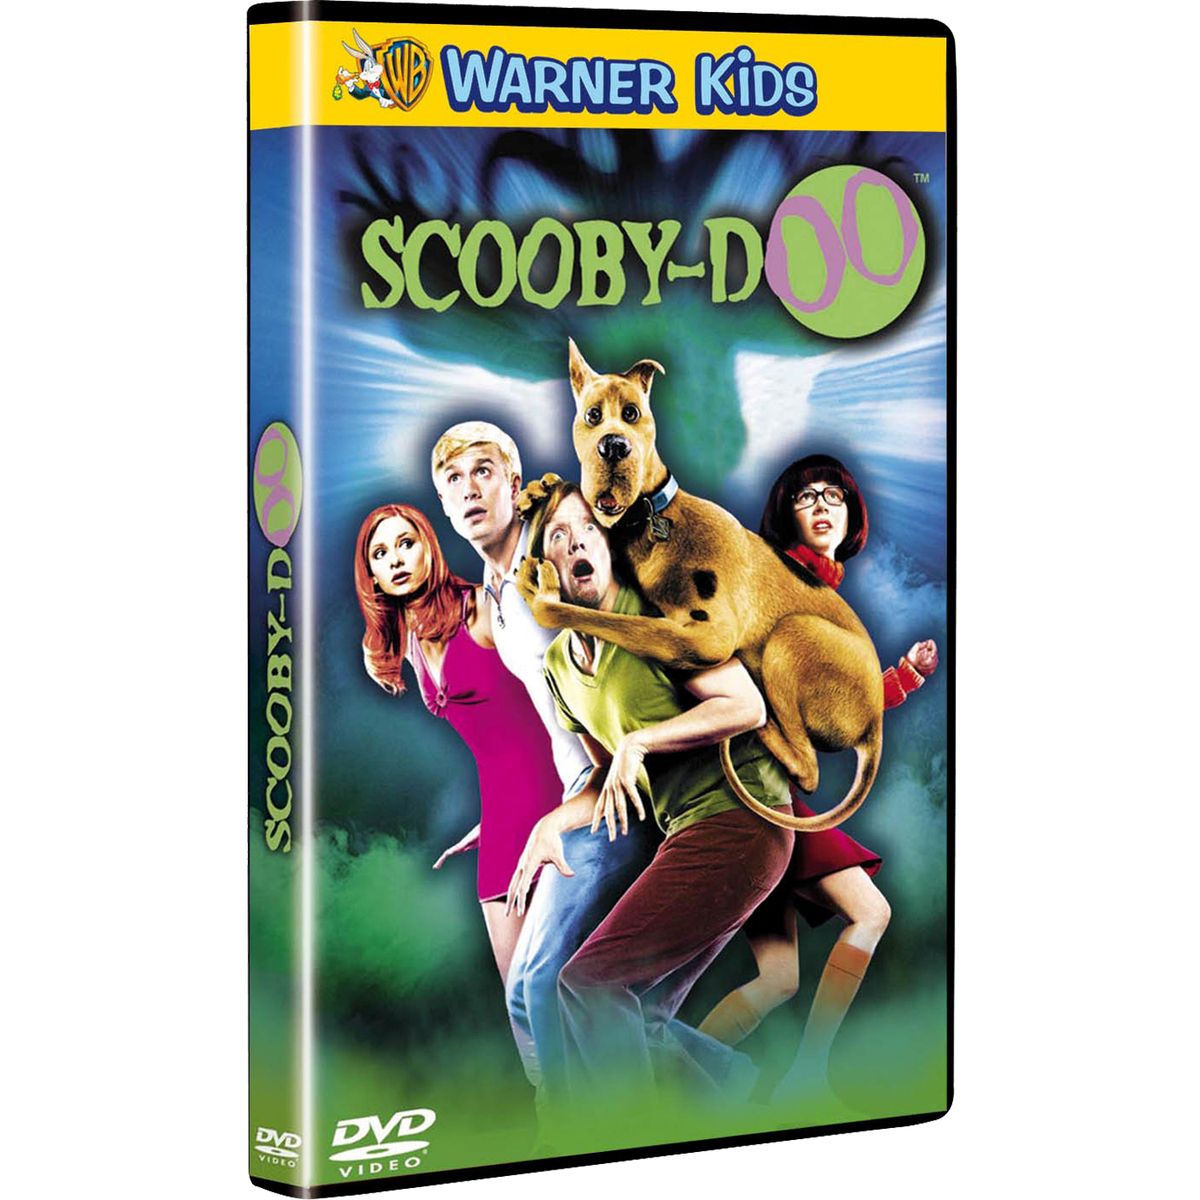 Scooby doo le film - dvd x1 1 pièce